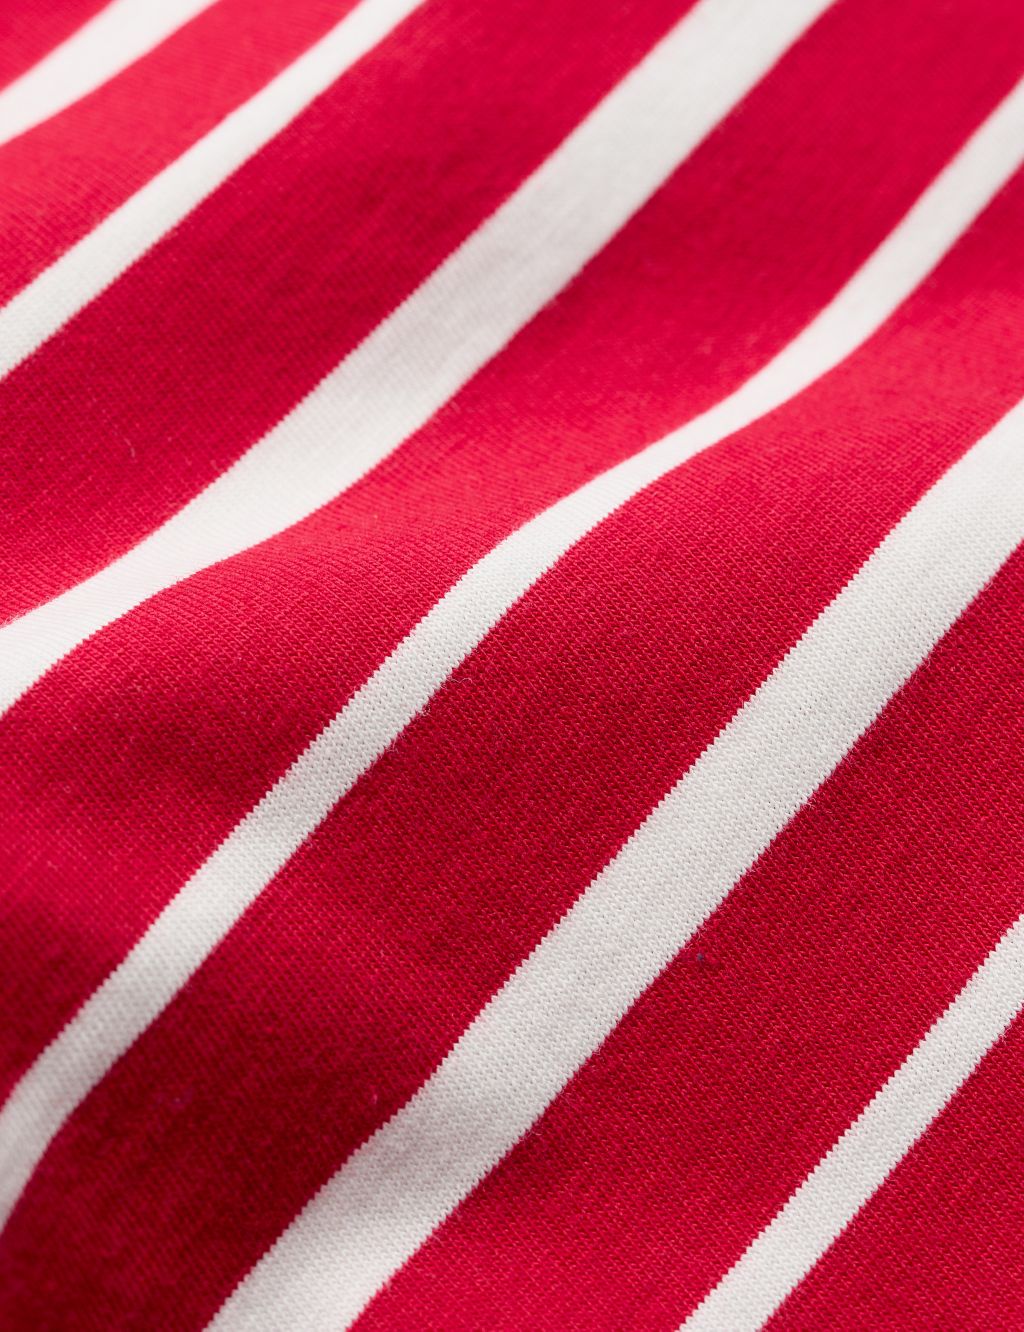 Organic Cotton Striped T-Shirt image 4